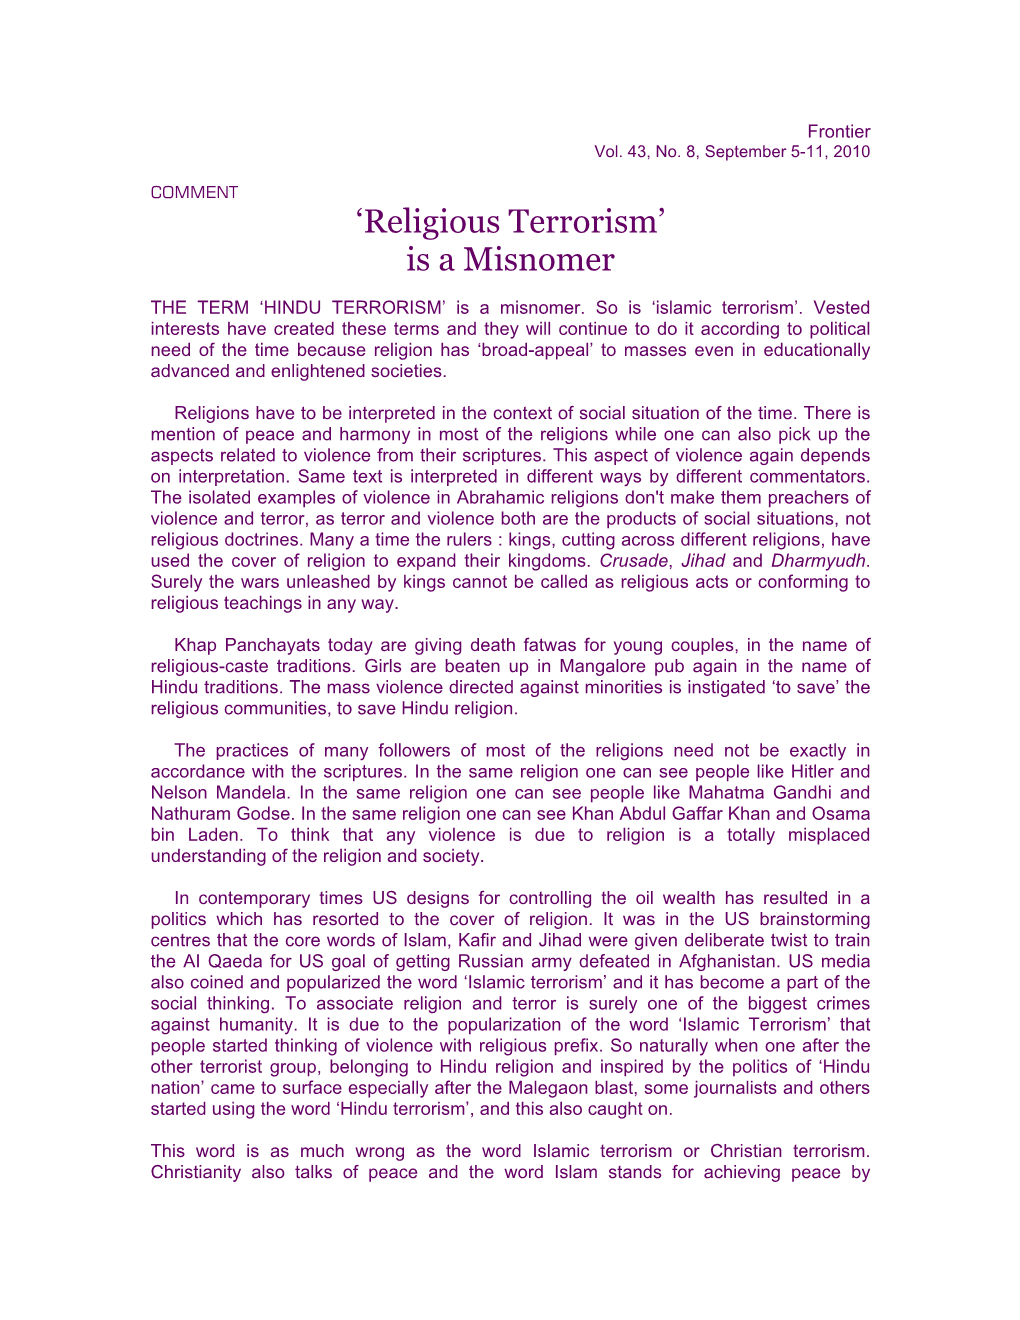 Religious Terrorism’ Is a Misnomer